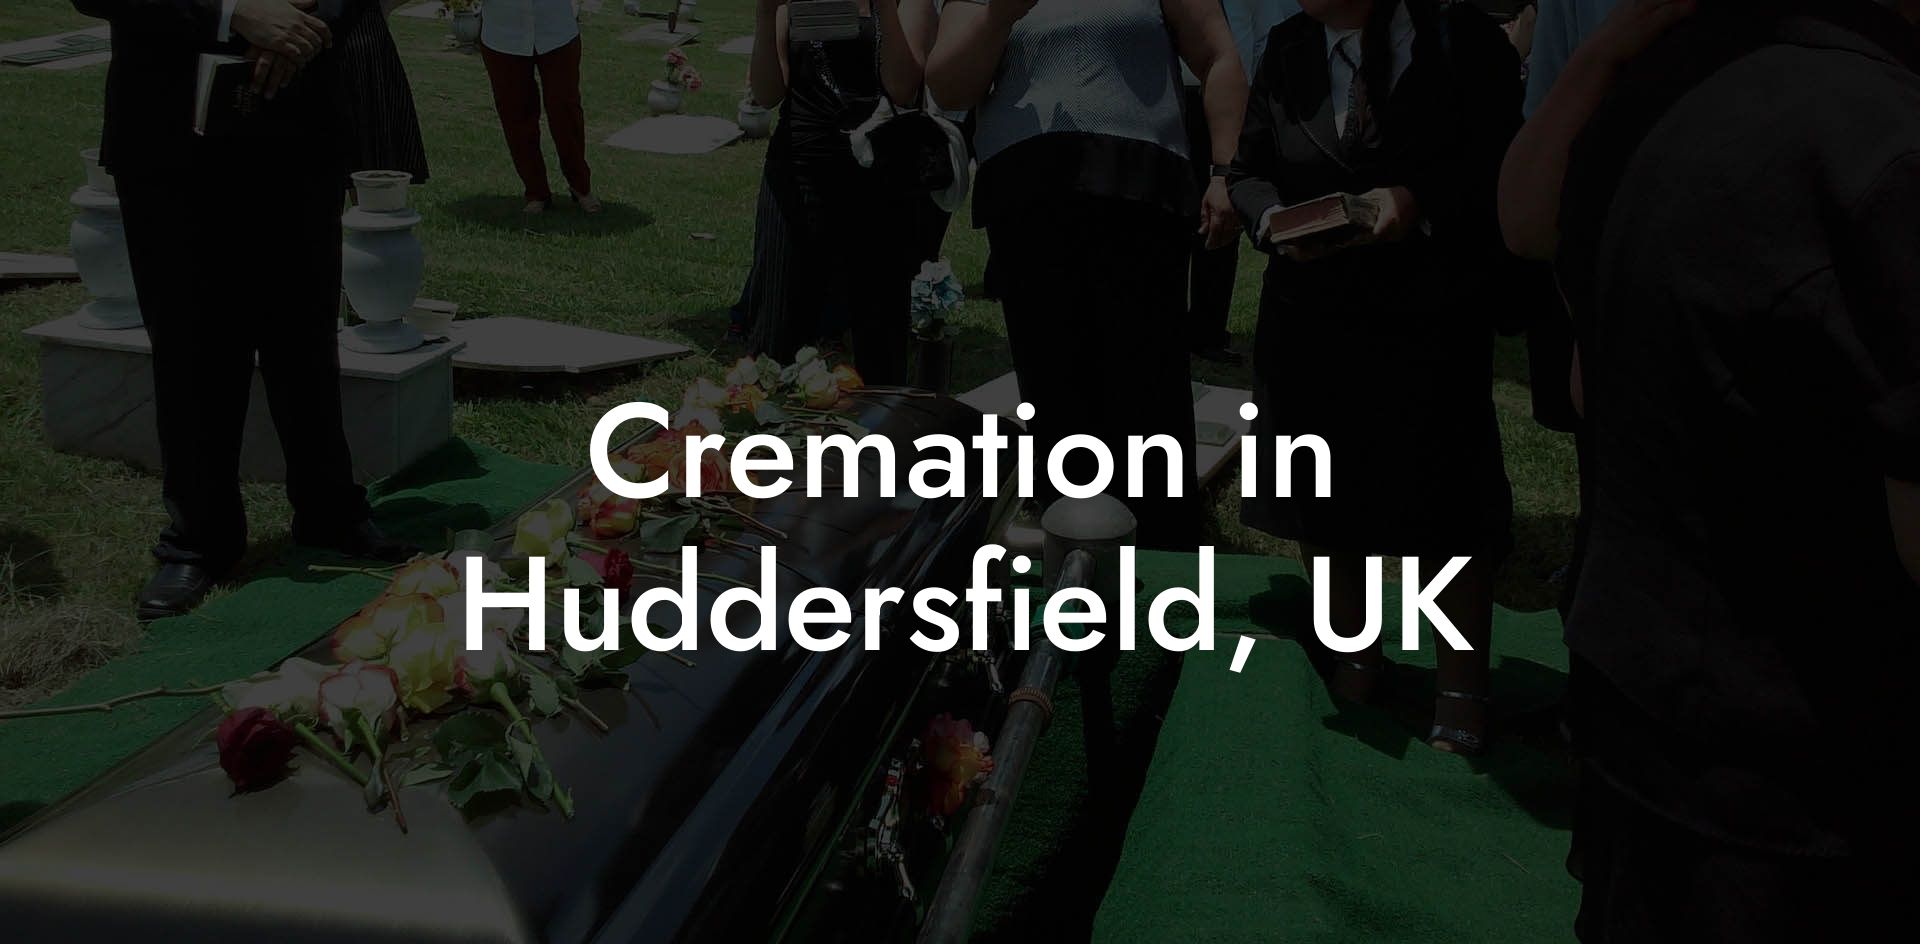 Cremation in Huddersfield, UK